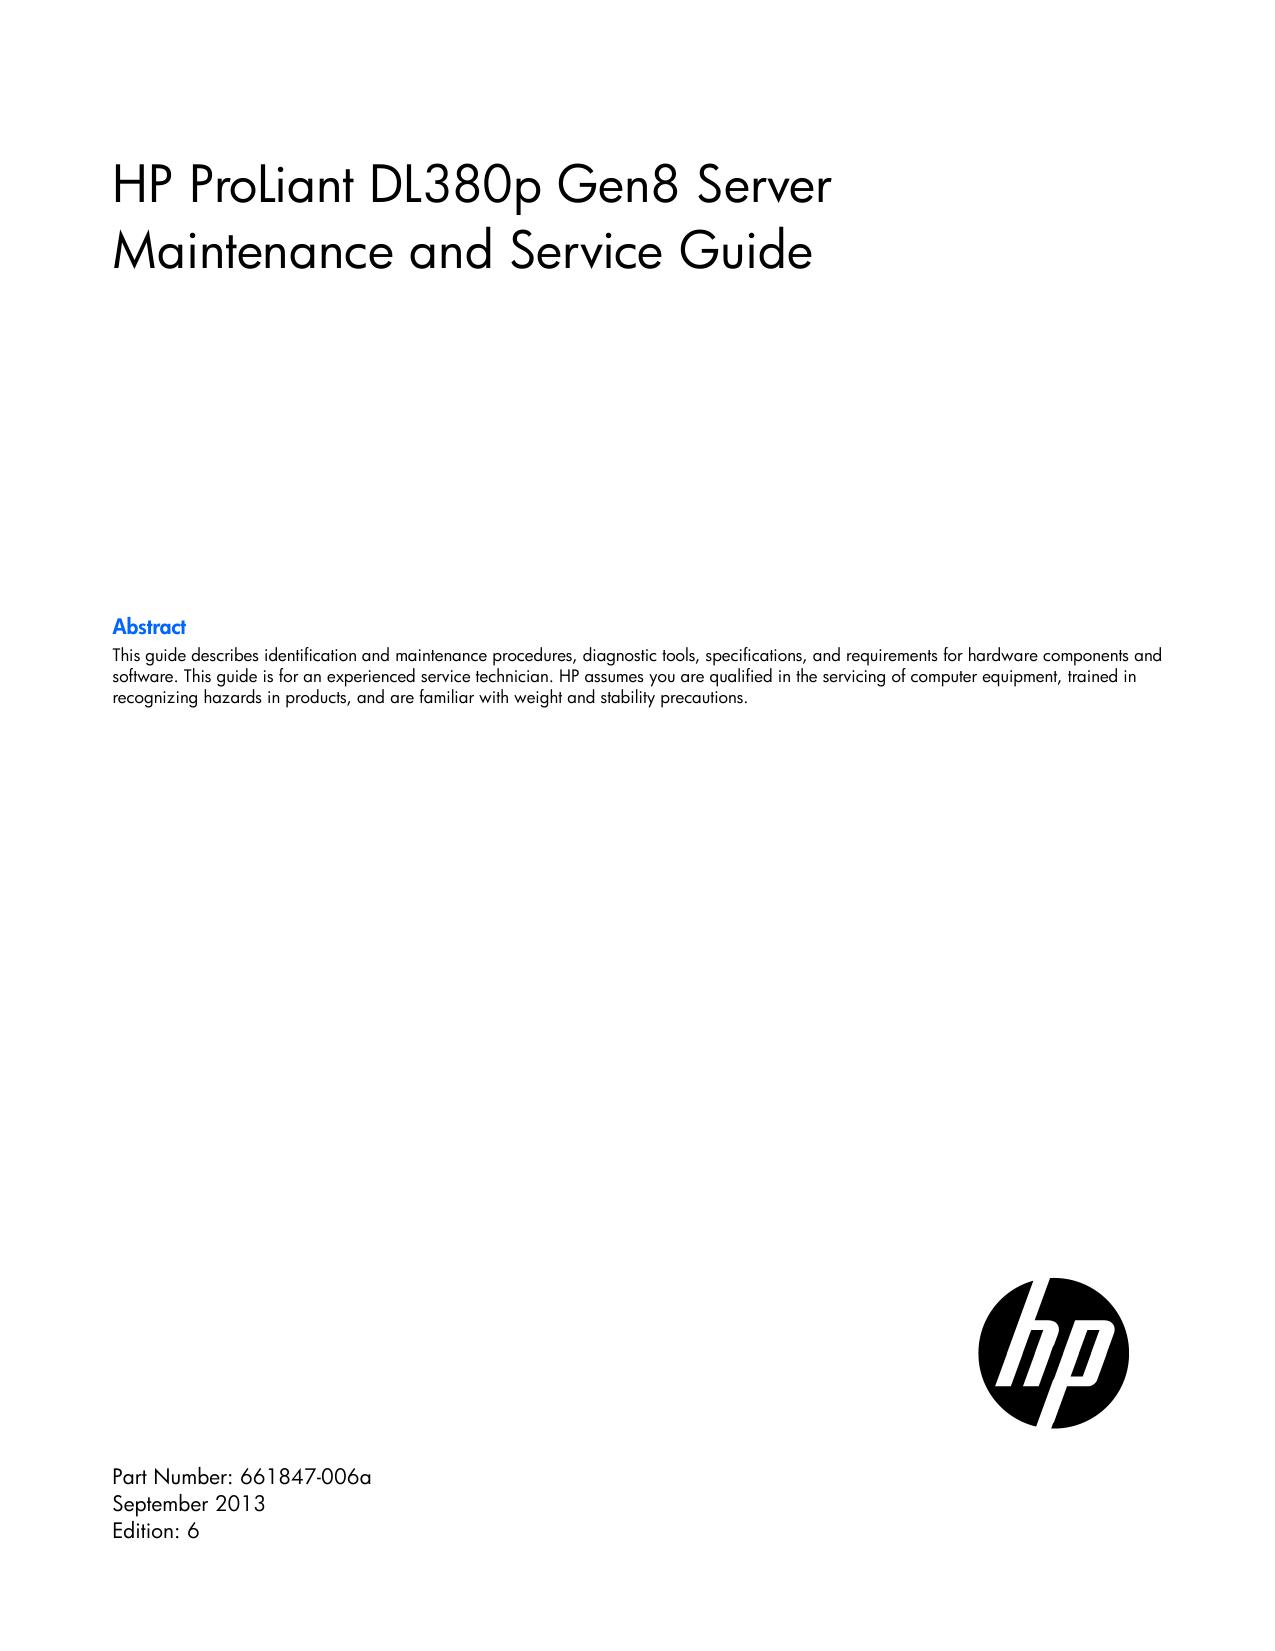 HP ProLiant DL380p Gen8 Server Maintenance and Service Guide